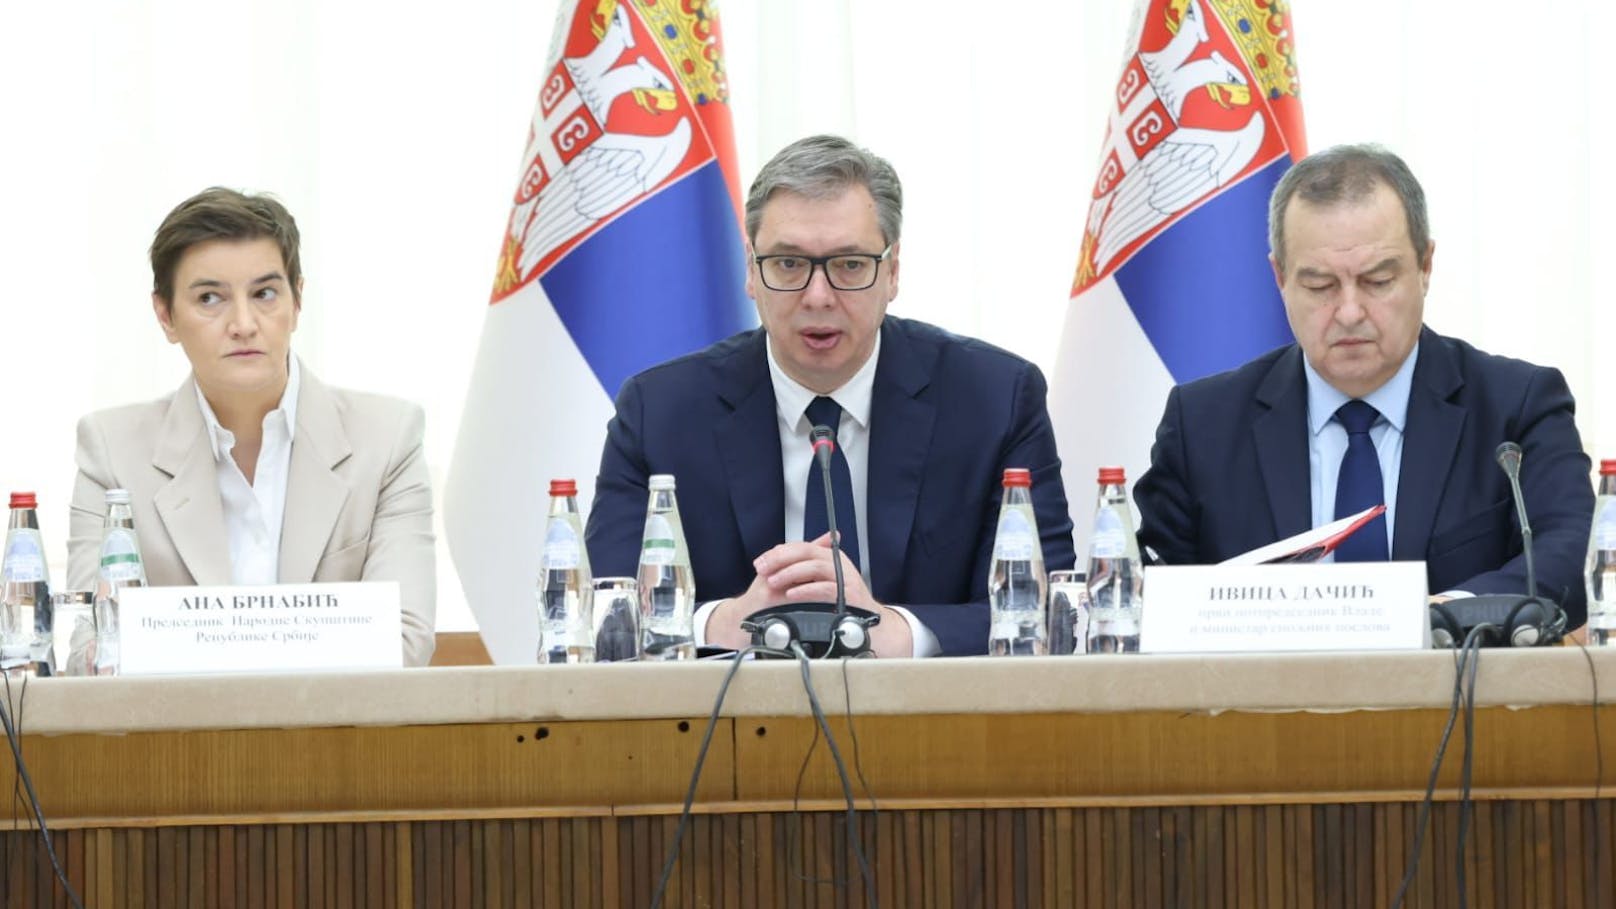 Serbiens Präsident <a rel="noopener" href="https://www.telegraf.rs/teme/aleksandar-vucic" target="_blank">Aleksandar Vučić</a> gab am 4. April bekannt, dass die vermisste Danka tot ist.